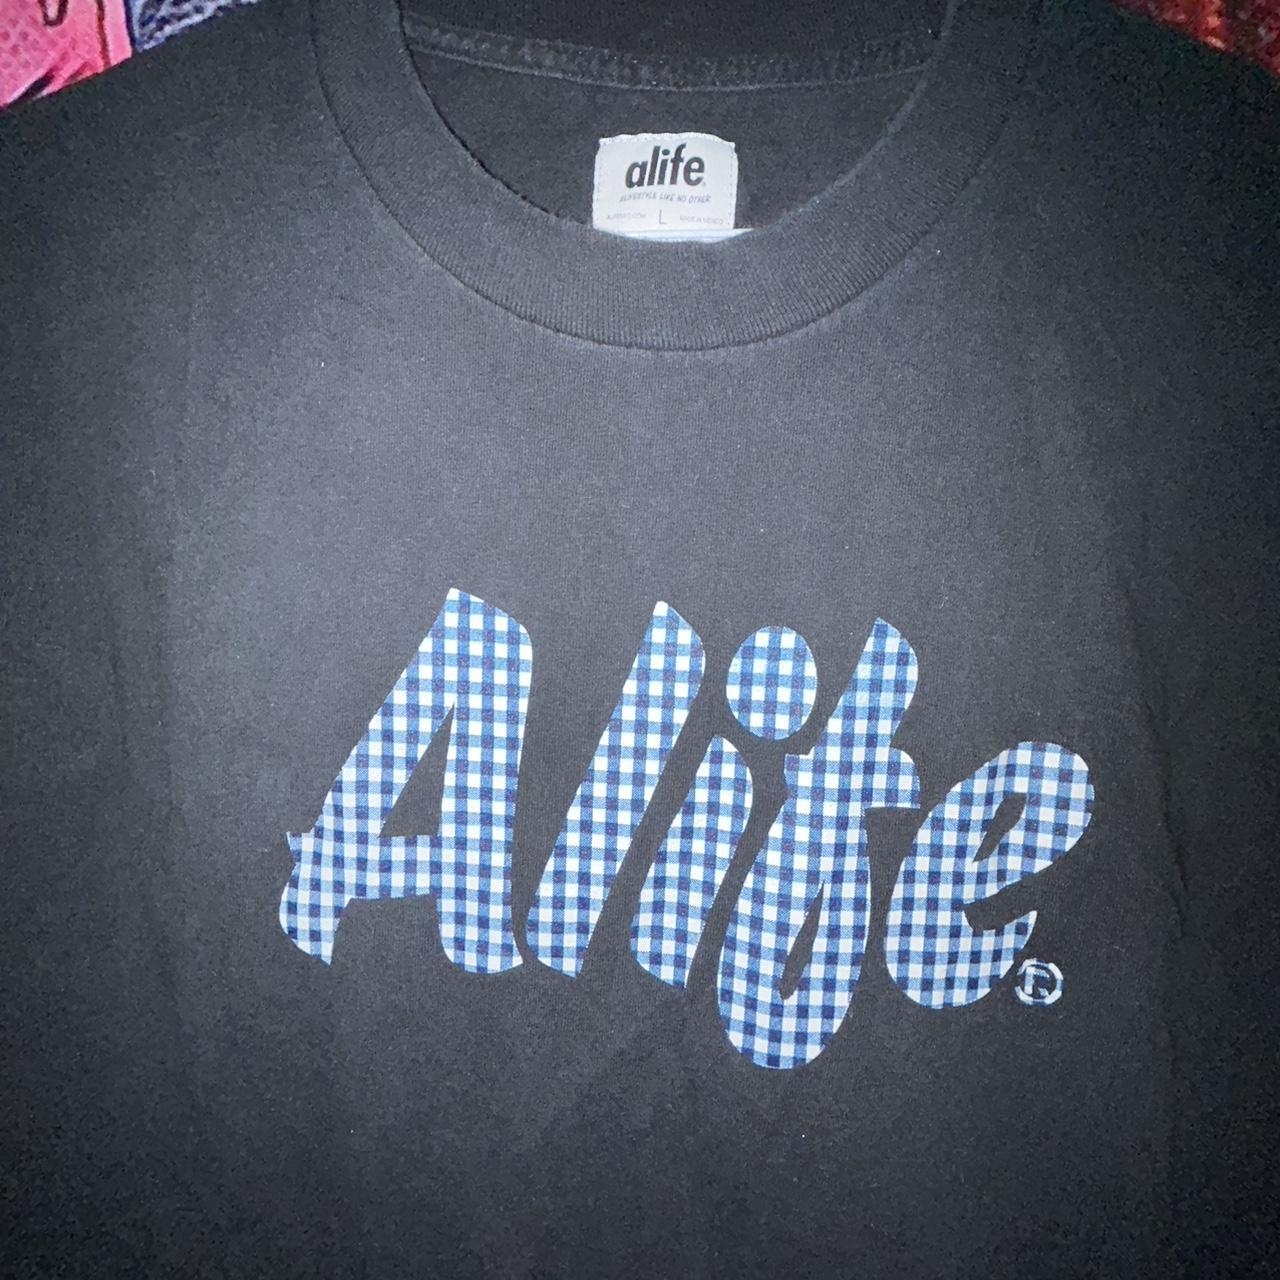 Alife Men's Black and Blue T-shirt (3)